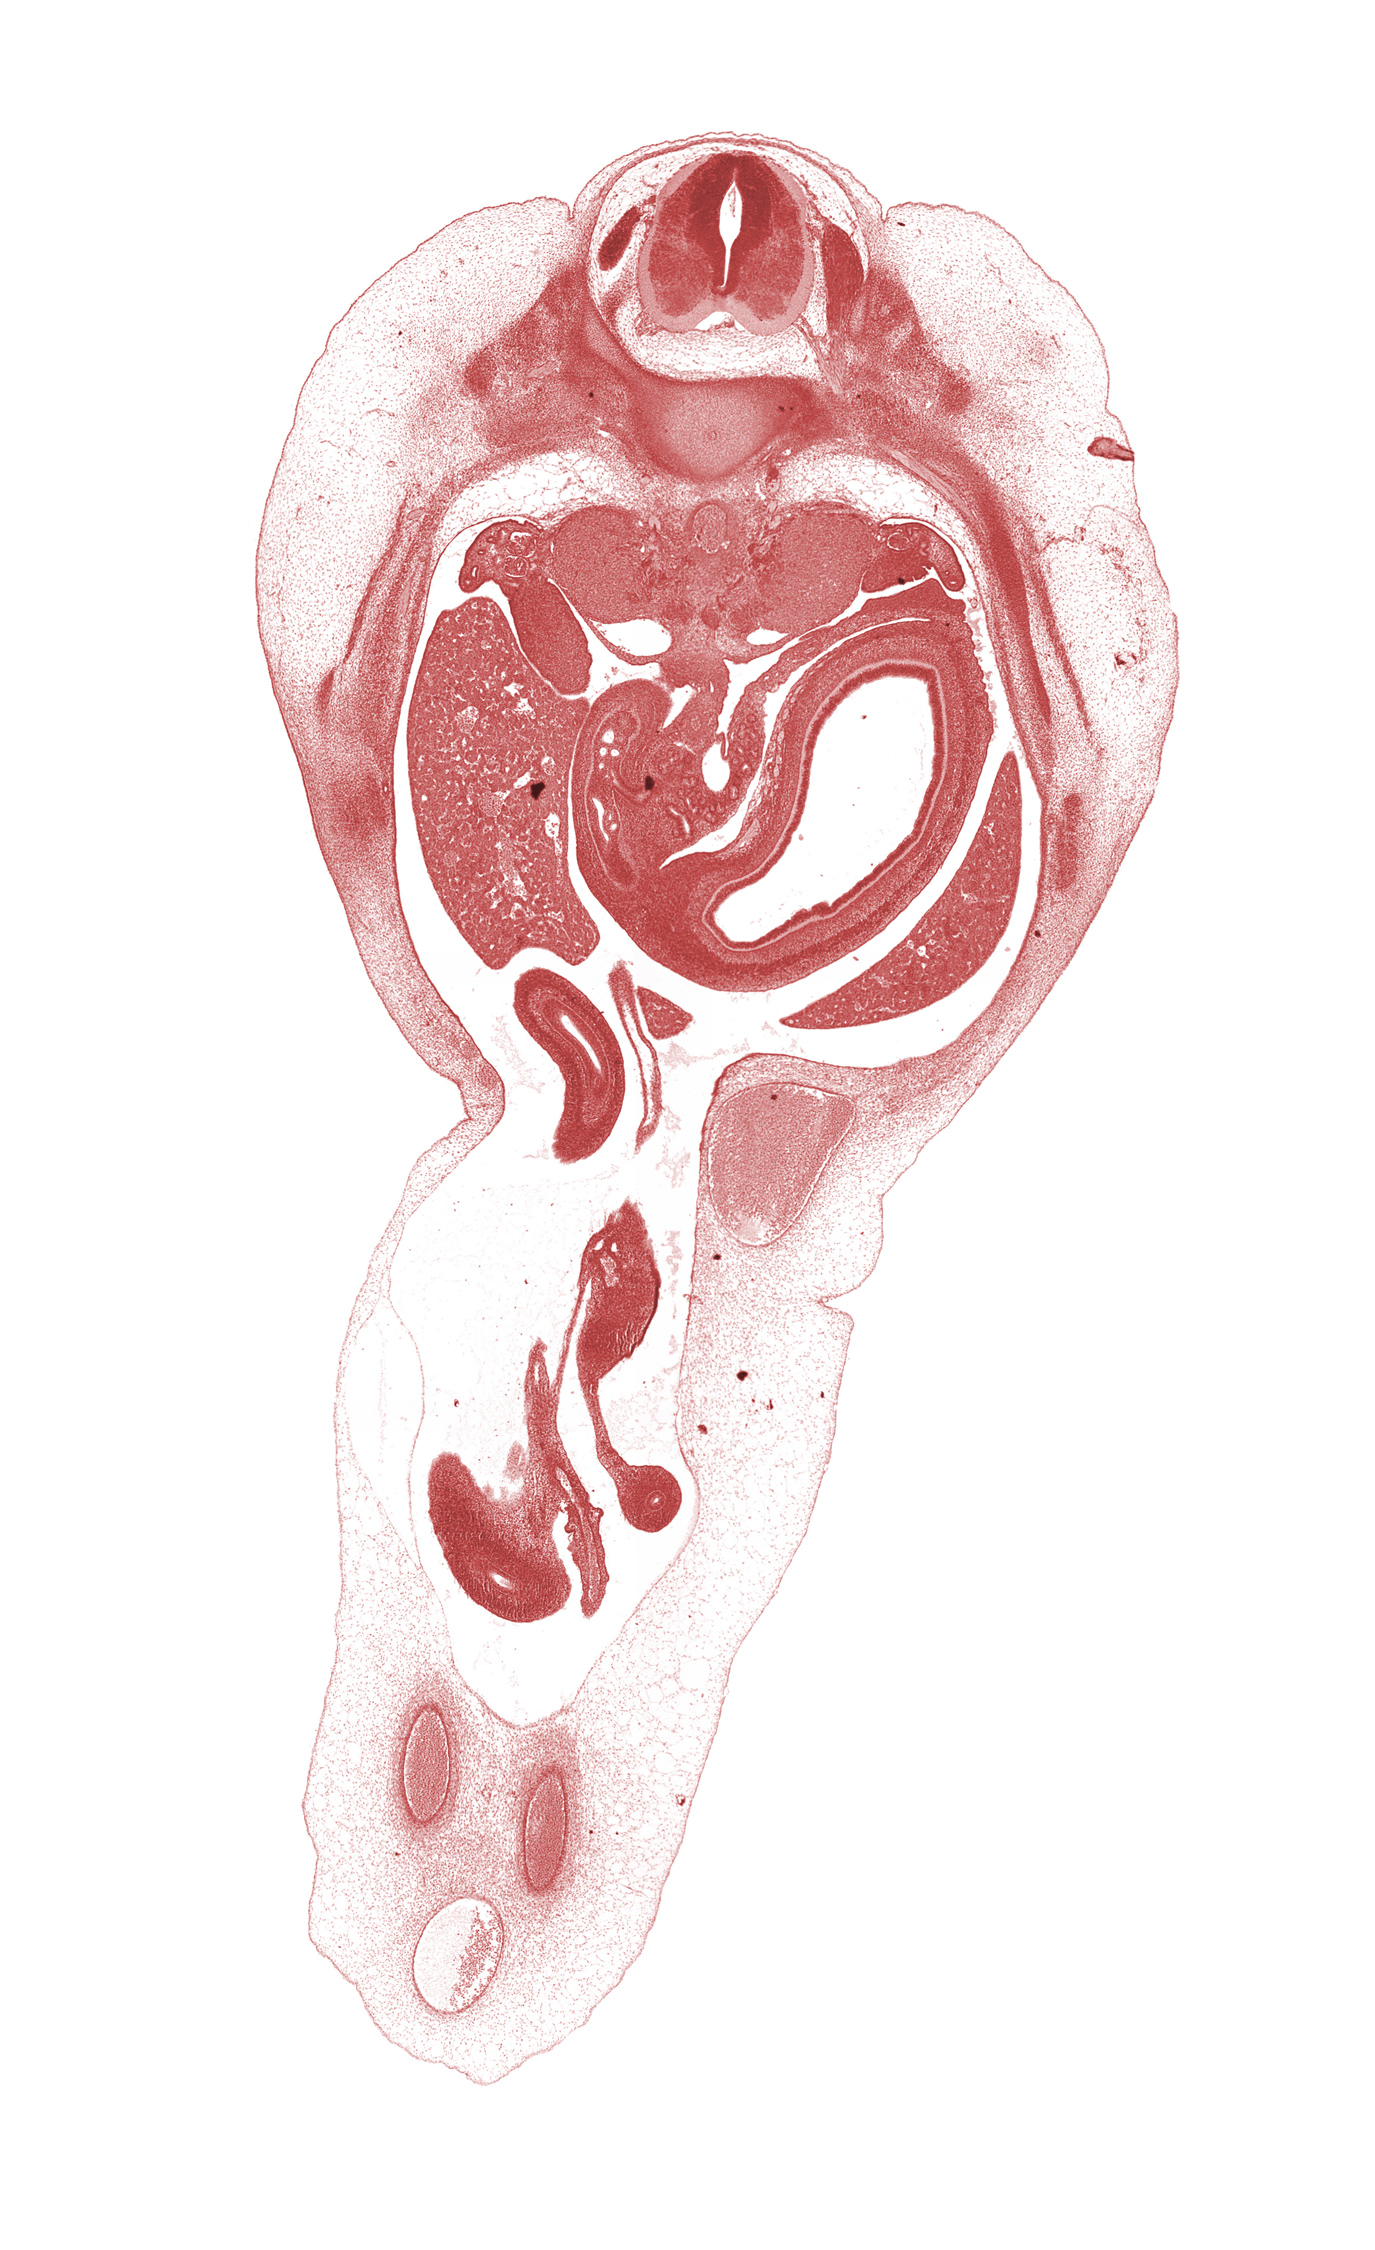 T-11 intercostal nerve, T-11 spinal ganglion, bile duct, blastemata of deep back muscles, caudal edge of quadrate lobe of liver, distal limb of herniated midgut, dorsal mesogastrium, duodenum (second part), gonadal ridge, hepatic portal vein, inferior vena cava, junction of omphaloenteric and superior mesenteric arteries, left lobe of liver, lesser sac (omental bursa), proximal limb of herniated midgut, pyloric antrum of stomach, right lobe of liver, superior mesenteric artery, umbilical vein